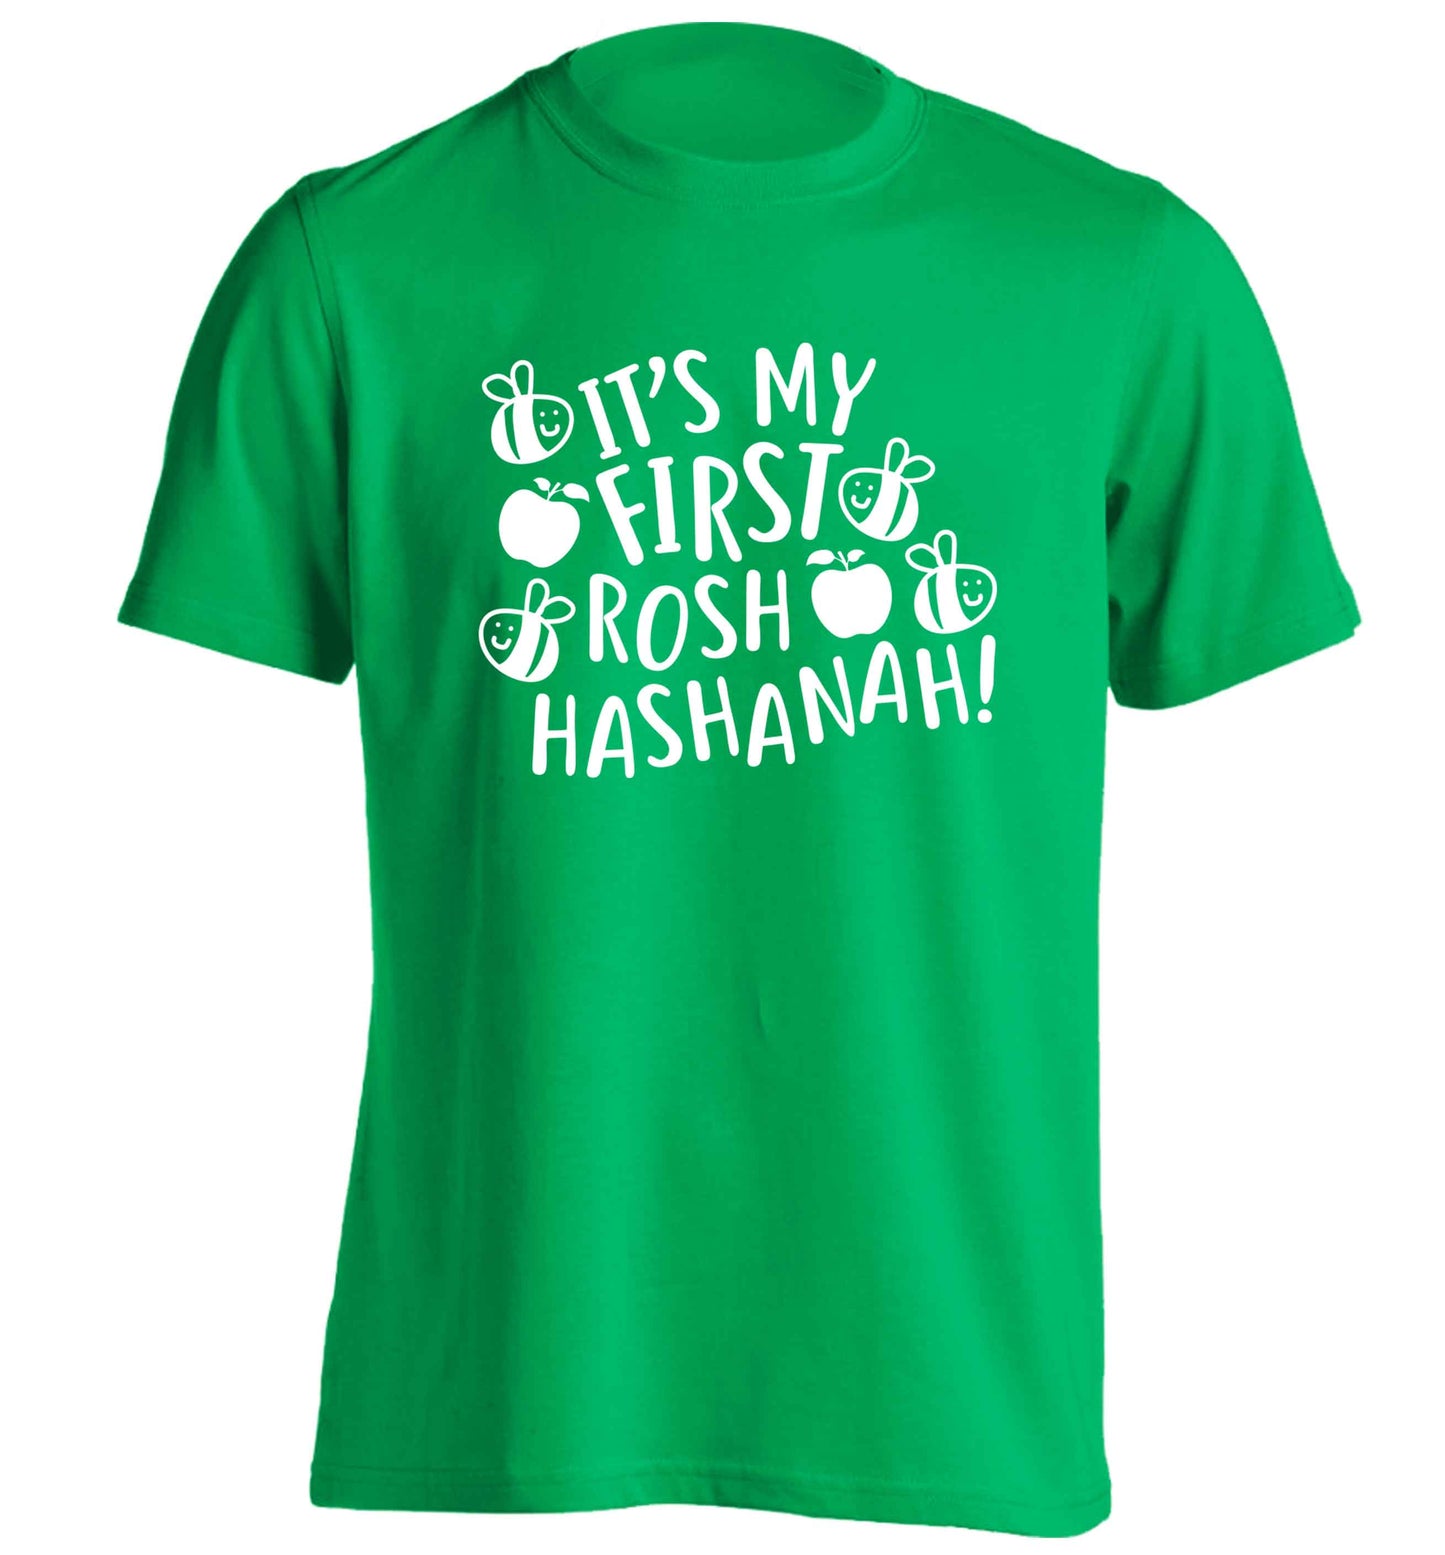 Its my first rosh hashanah adults unisex green Tshirt 2XL